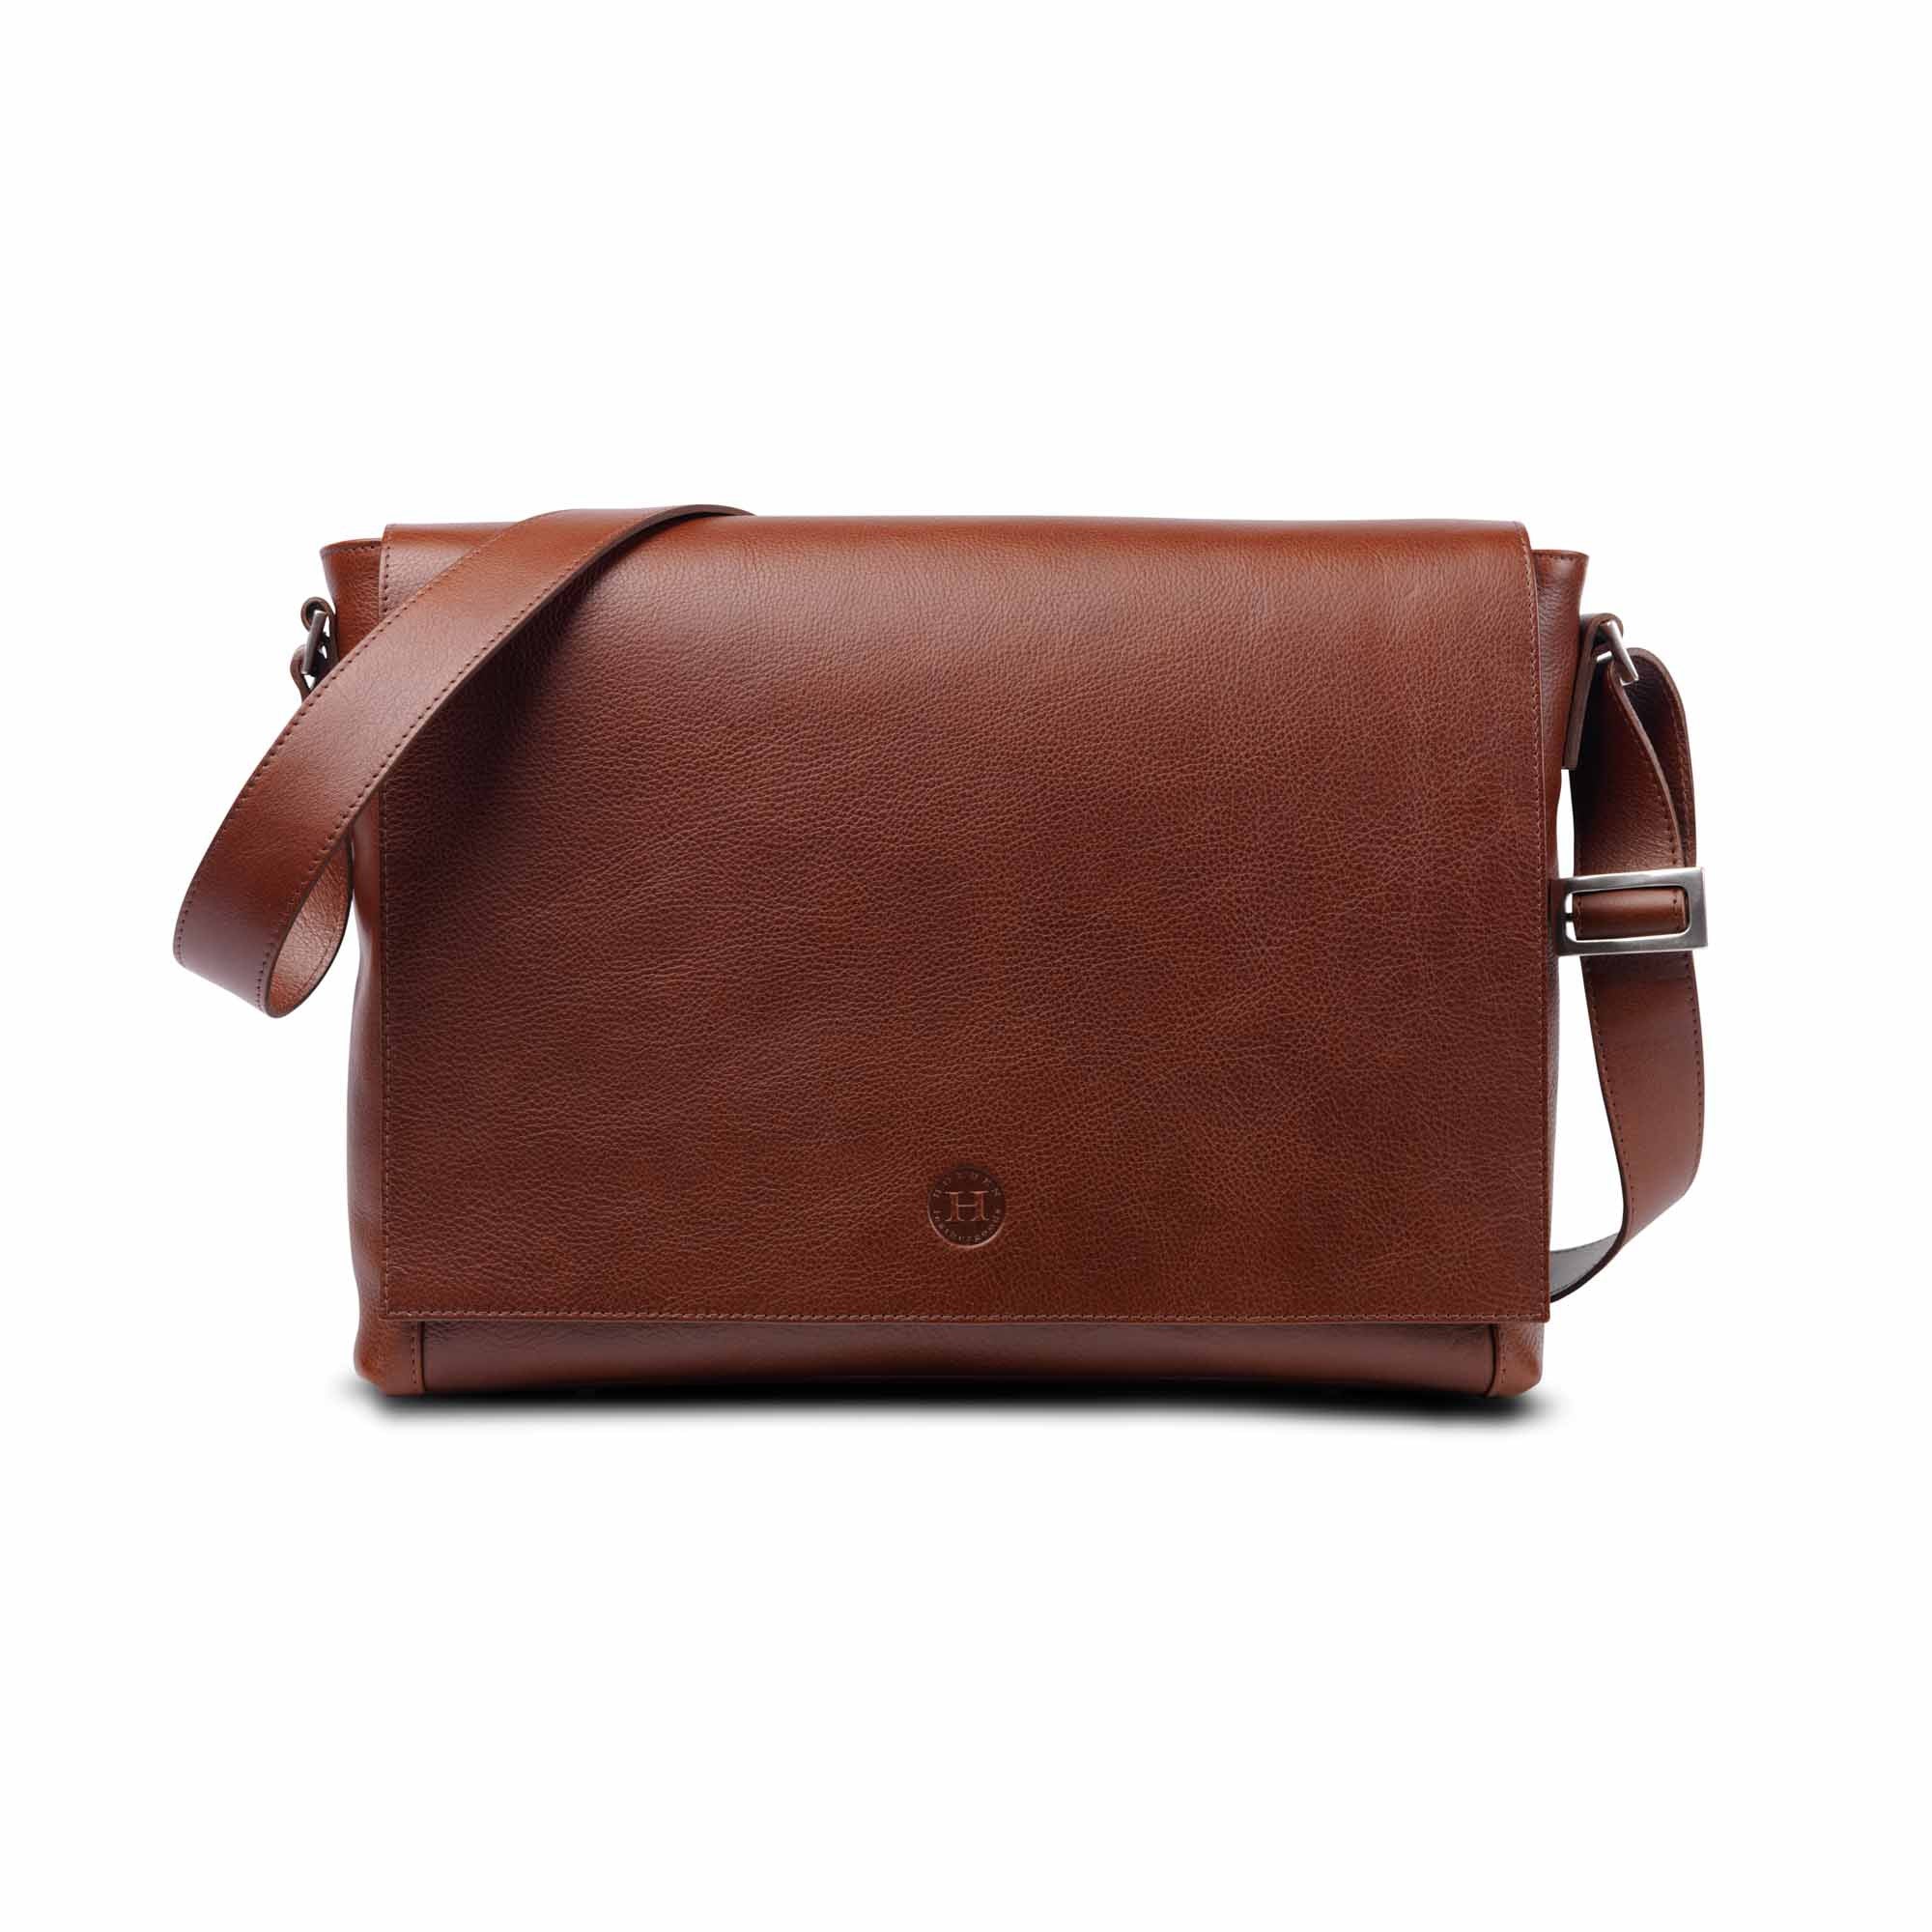 Holden Leather Laptop Bag Chestnut - Holden Leathergoods, leather bags handmade in Ireland - 1